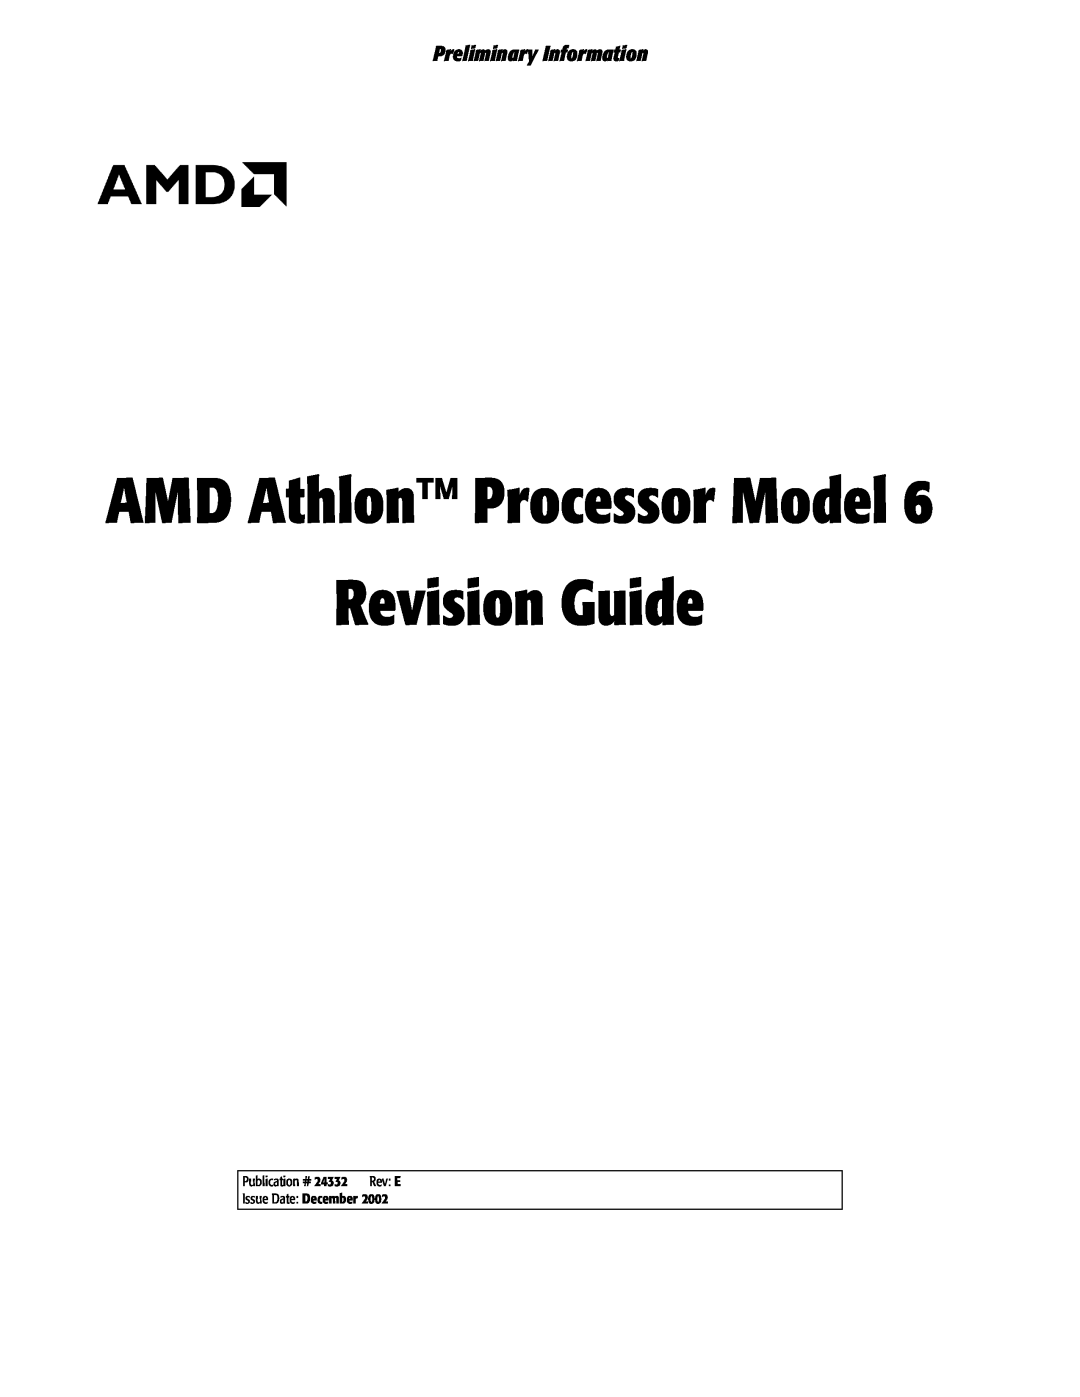 AMD 6 manual Preliminary Information, Revision Guide, AMD Athlon Processor Model 